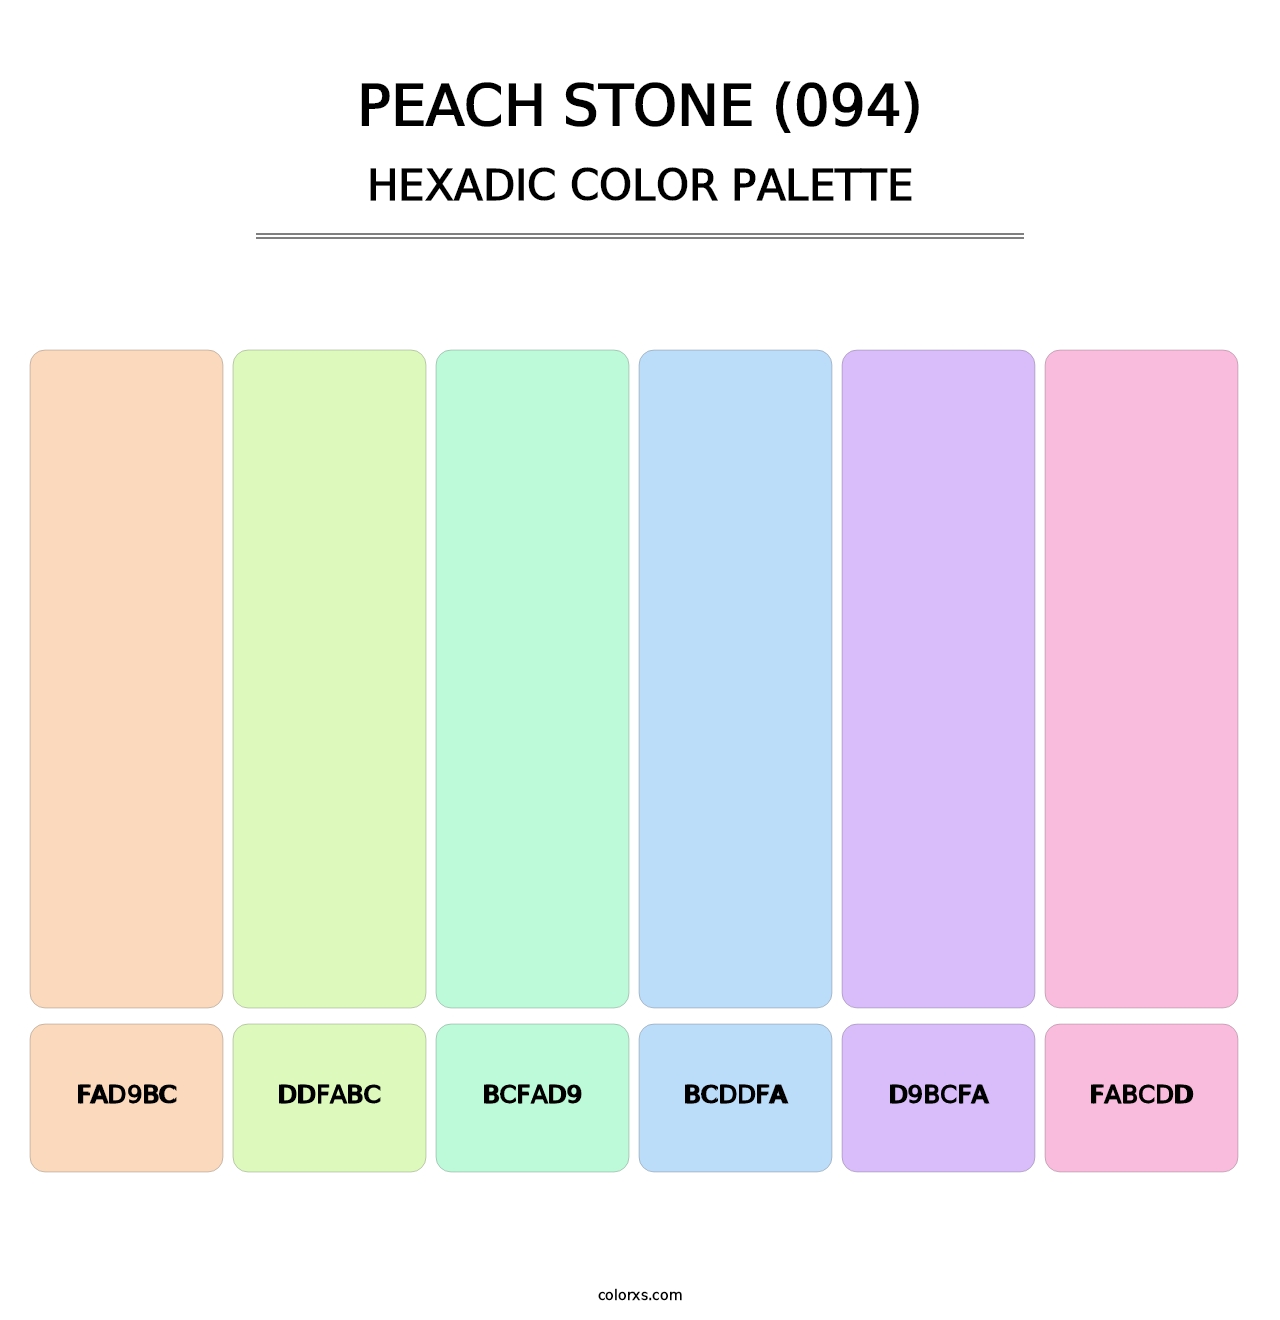 Peach Stone (094) - Hexadic Color Palette